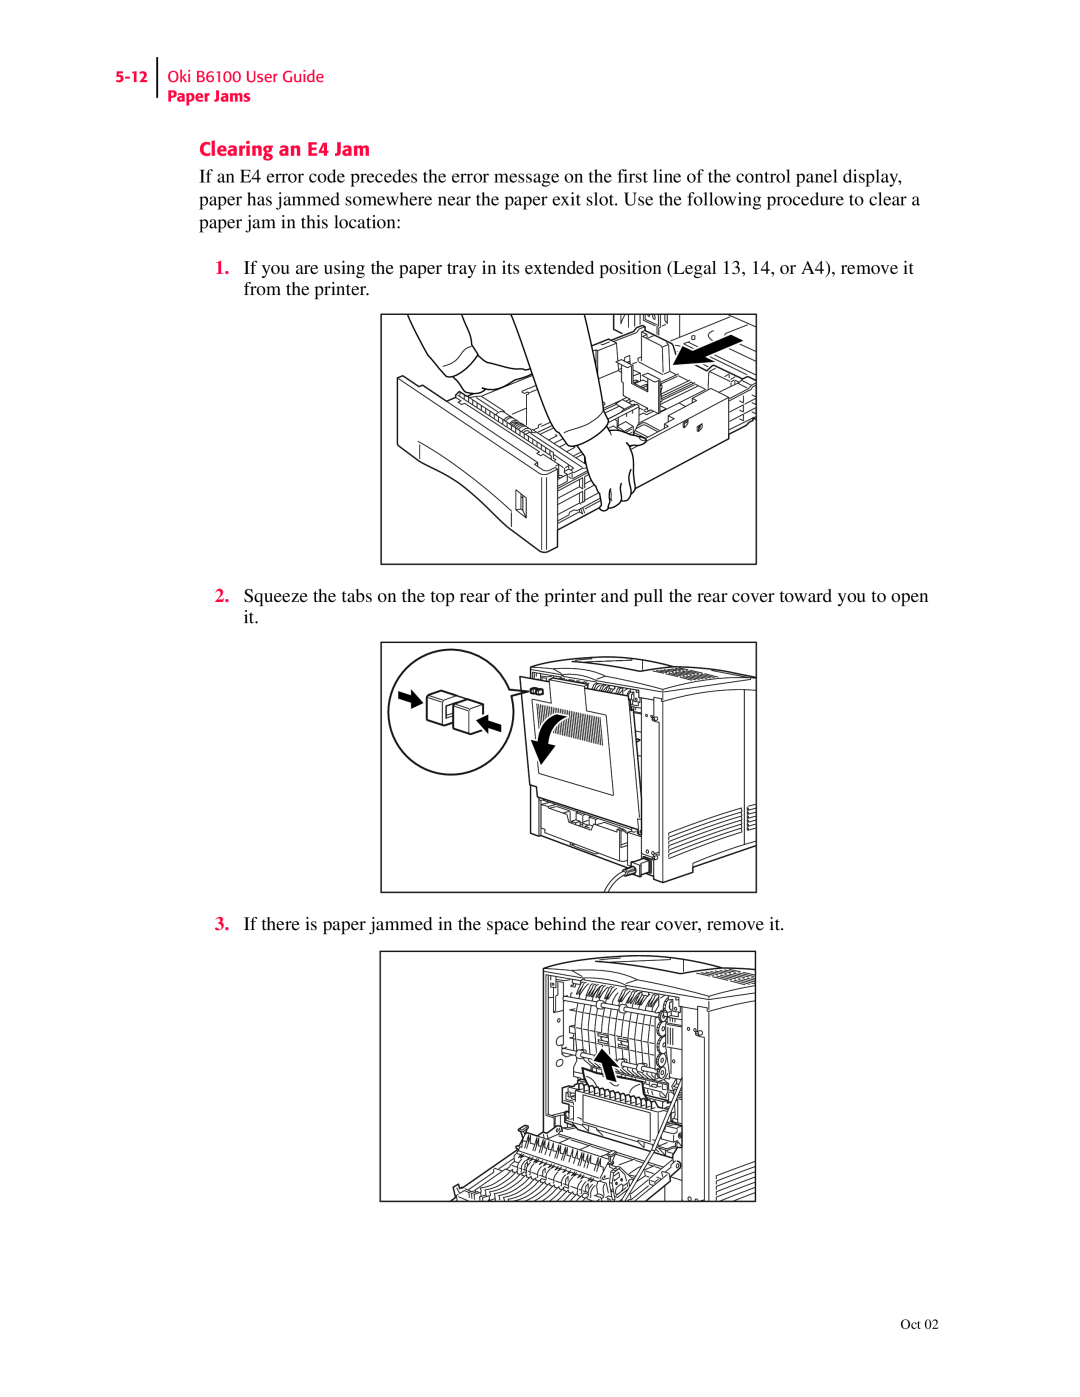 Oki manual Clearing an E4 Jam, Oki B6100 User Guide Paper Jams 